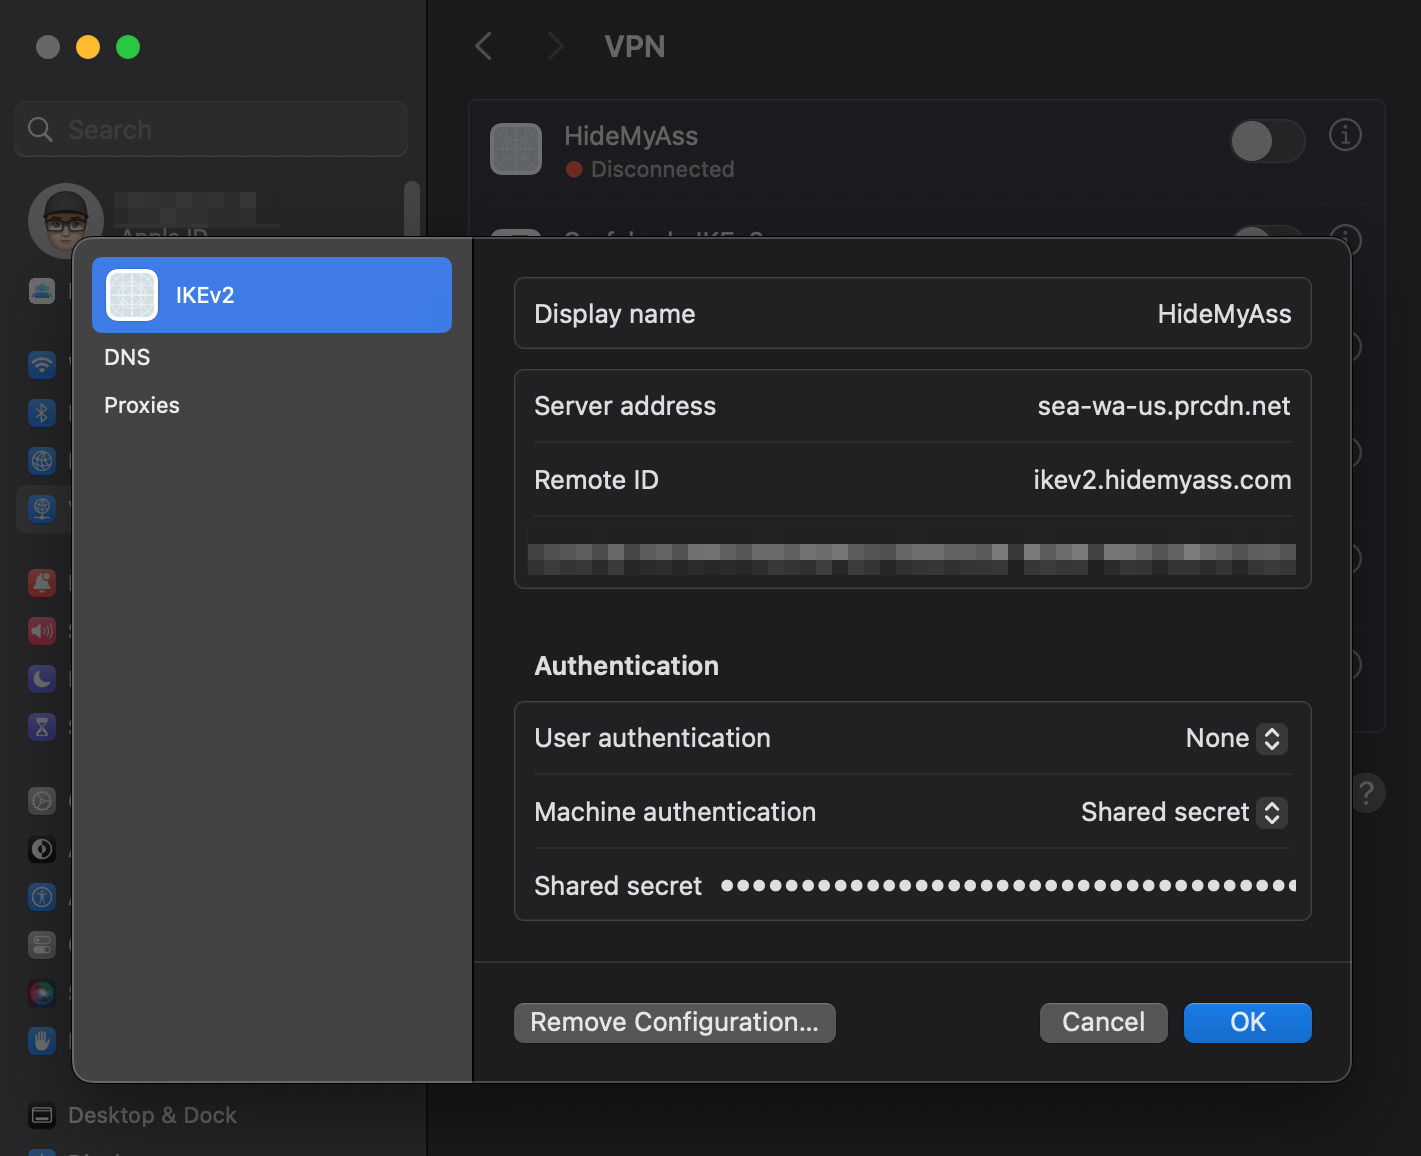 Mac VPN settings showing Remove Configuration option for HMA VPN